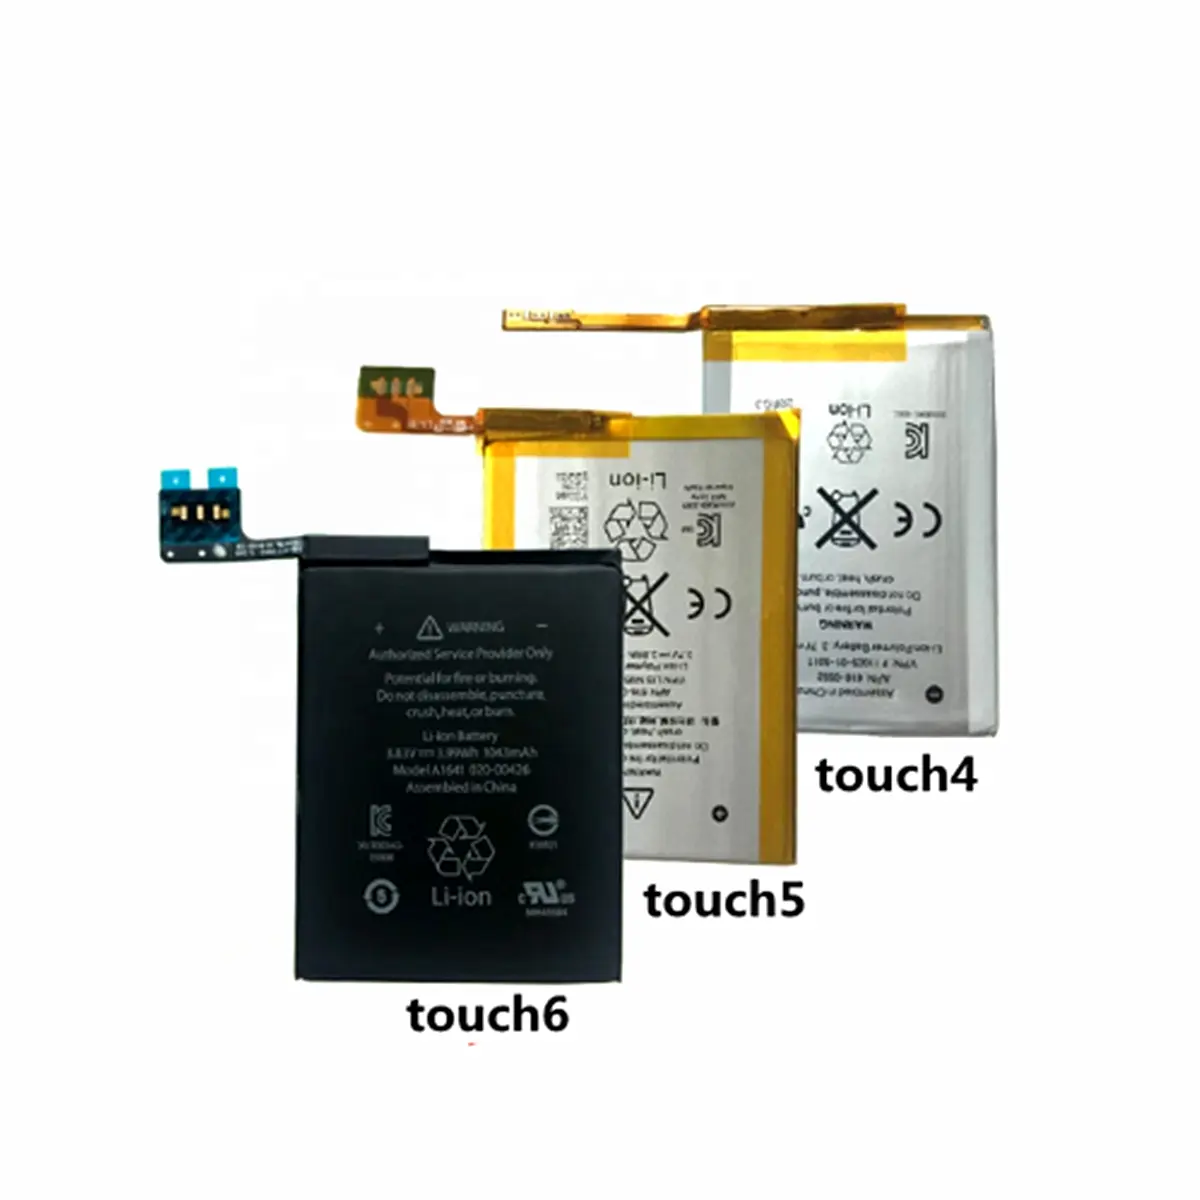 Harga pabrik touch 1 2 3 4 5 6 untuk iPod baterai A1312 a1319 a1318 a1367 a1421 a1574